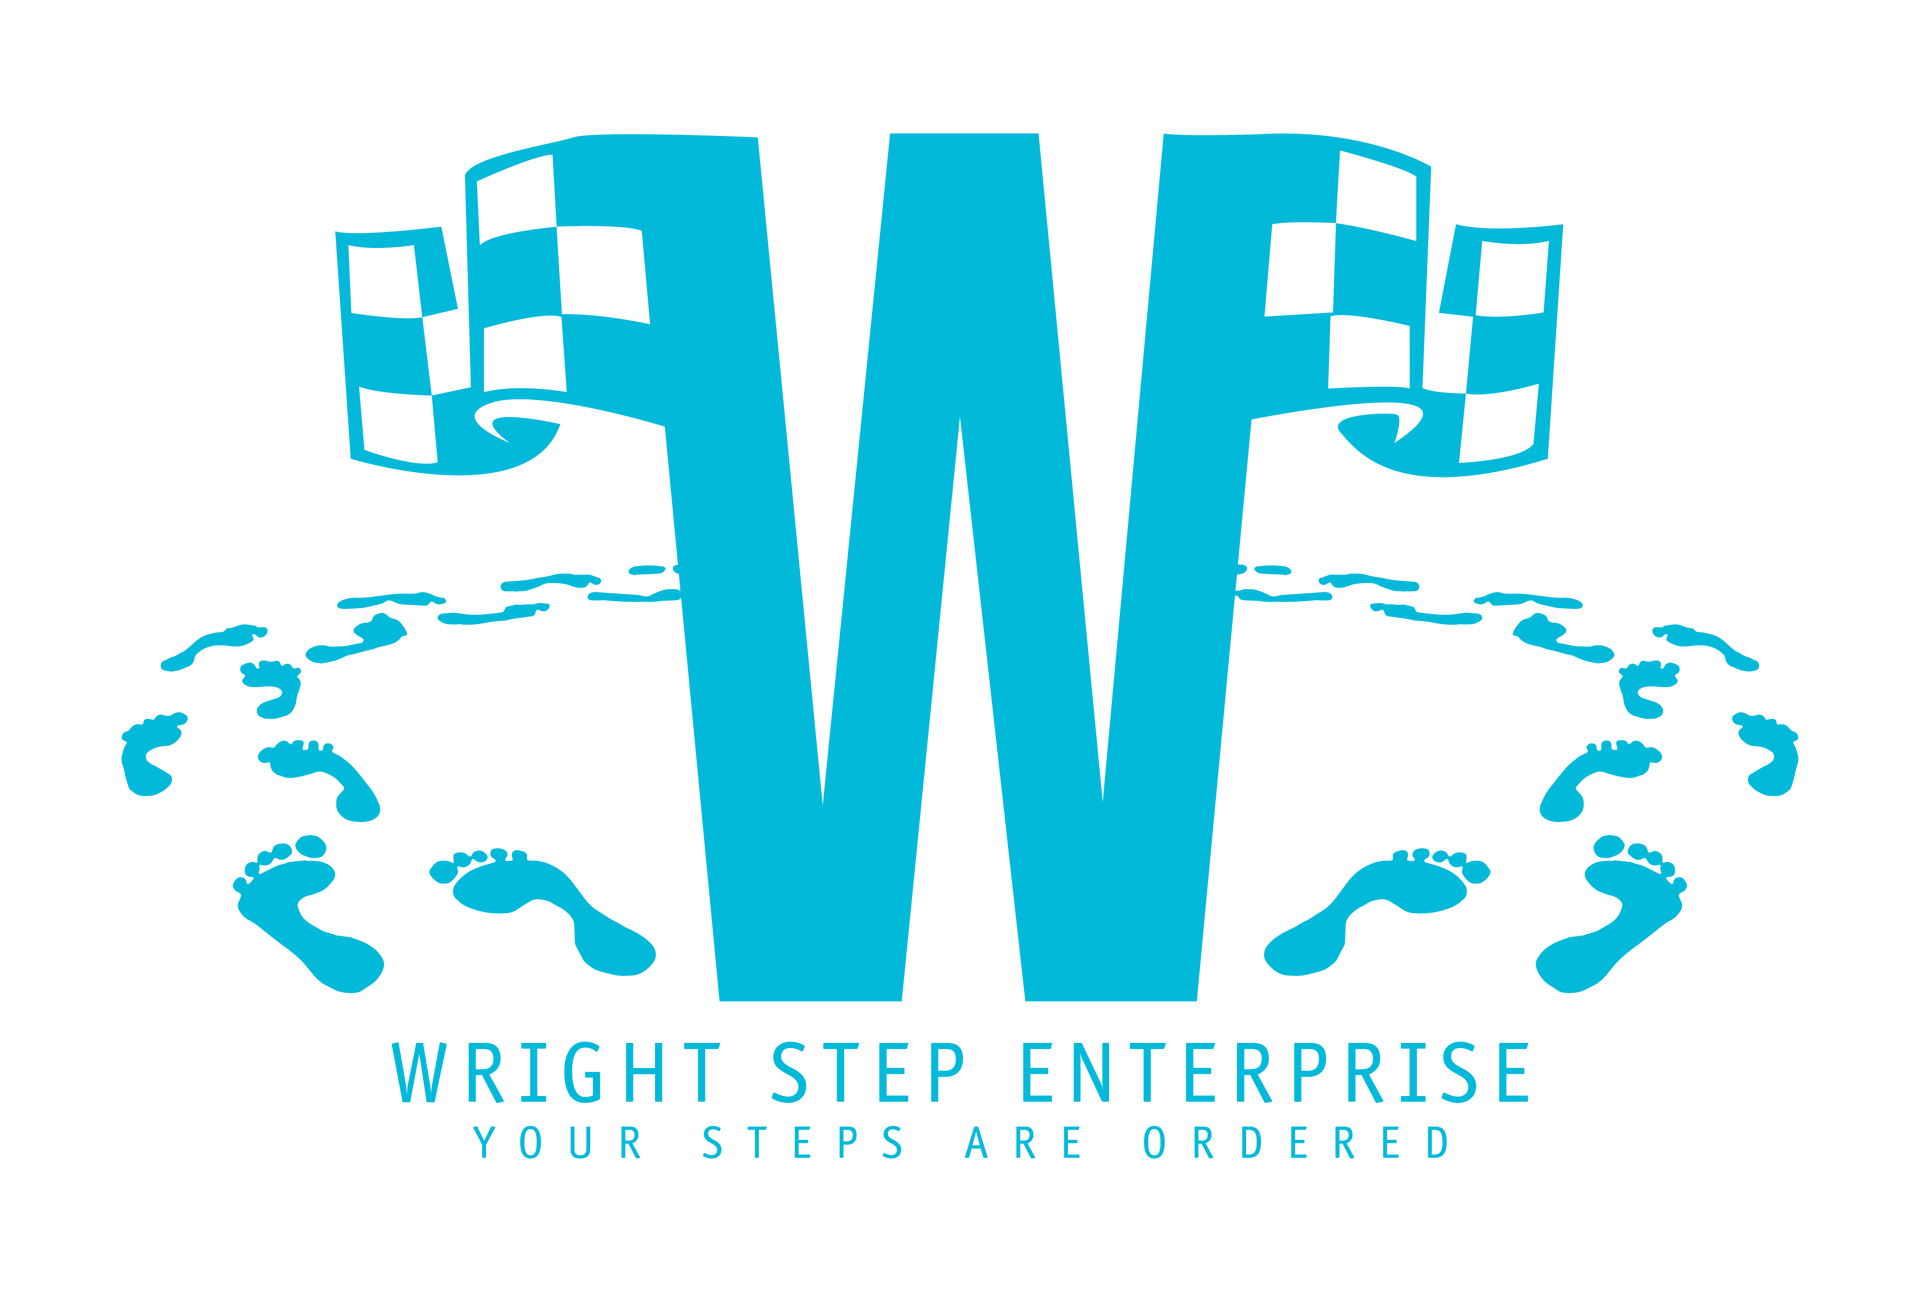 Wright Step Enterprise